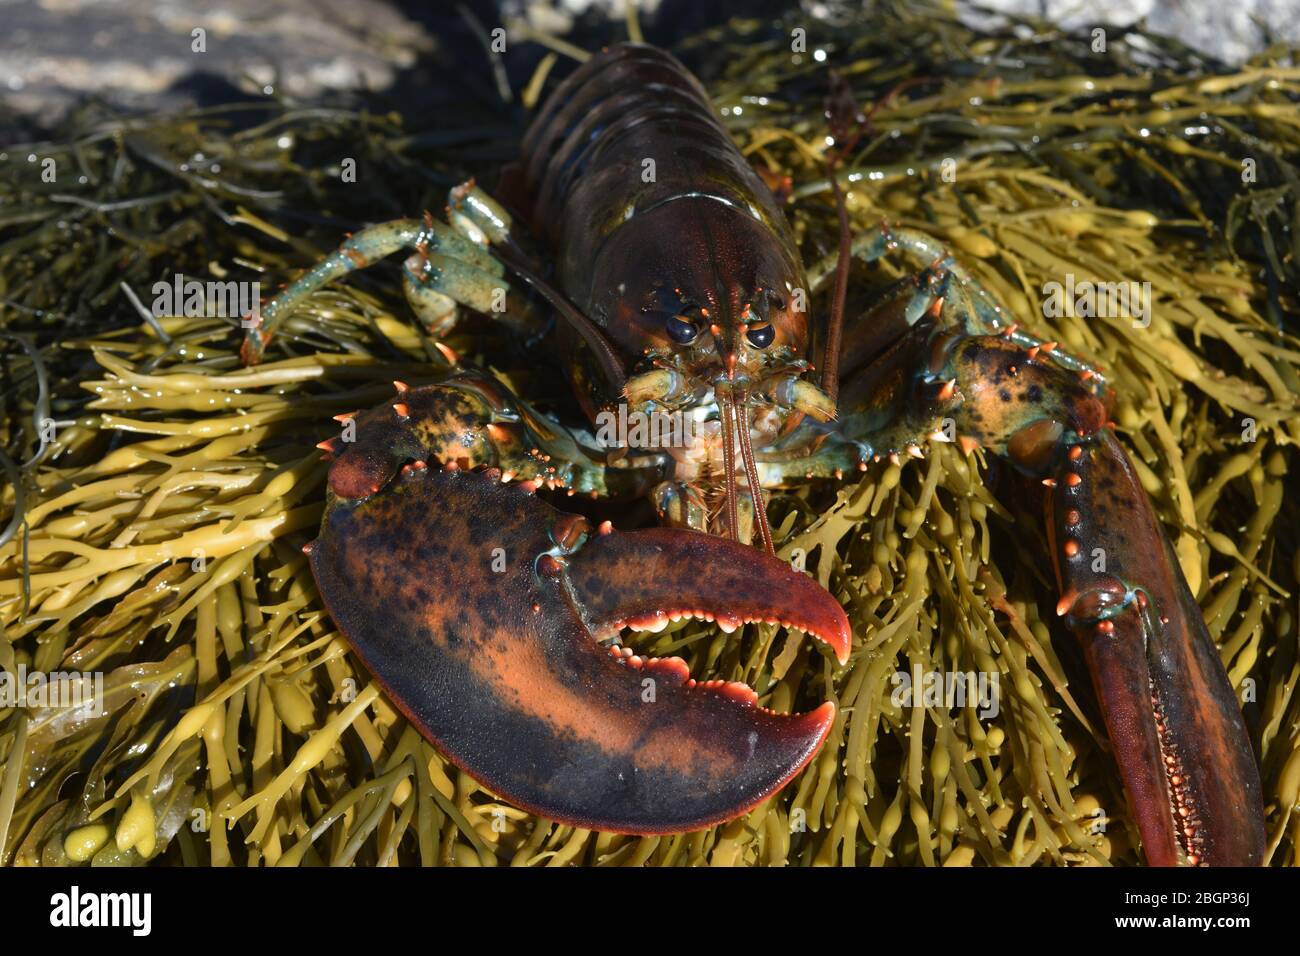 Beautiful maine lobster off the coast Stock Photo